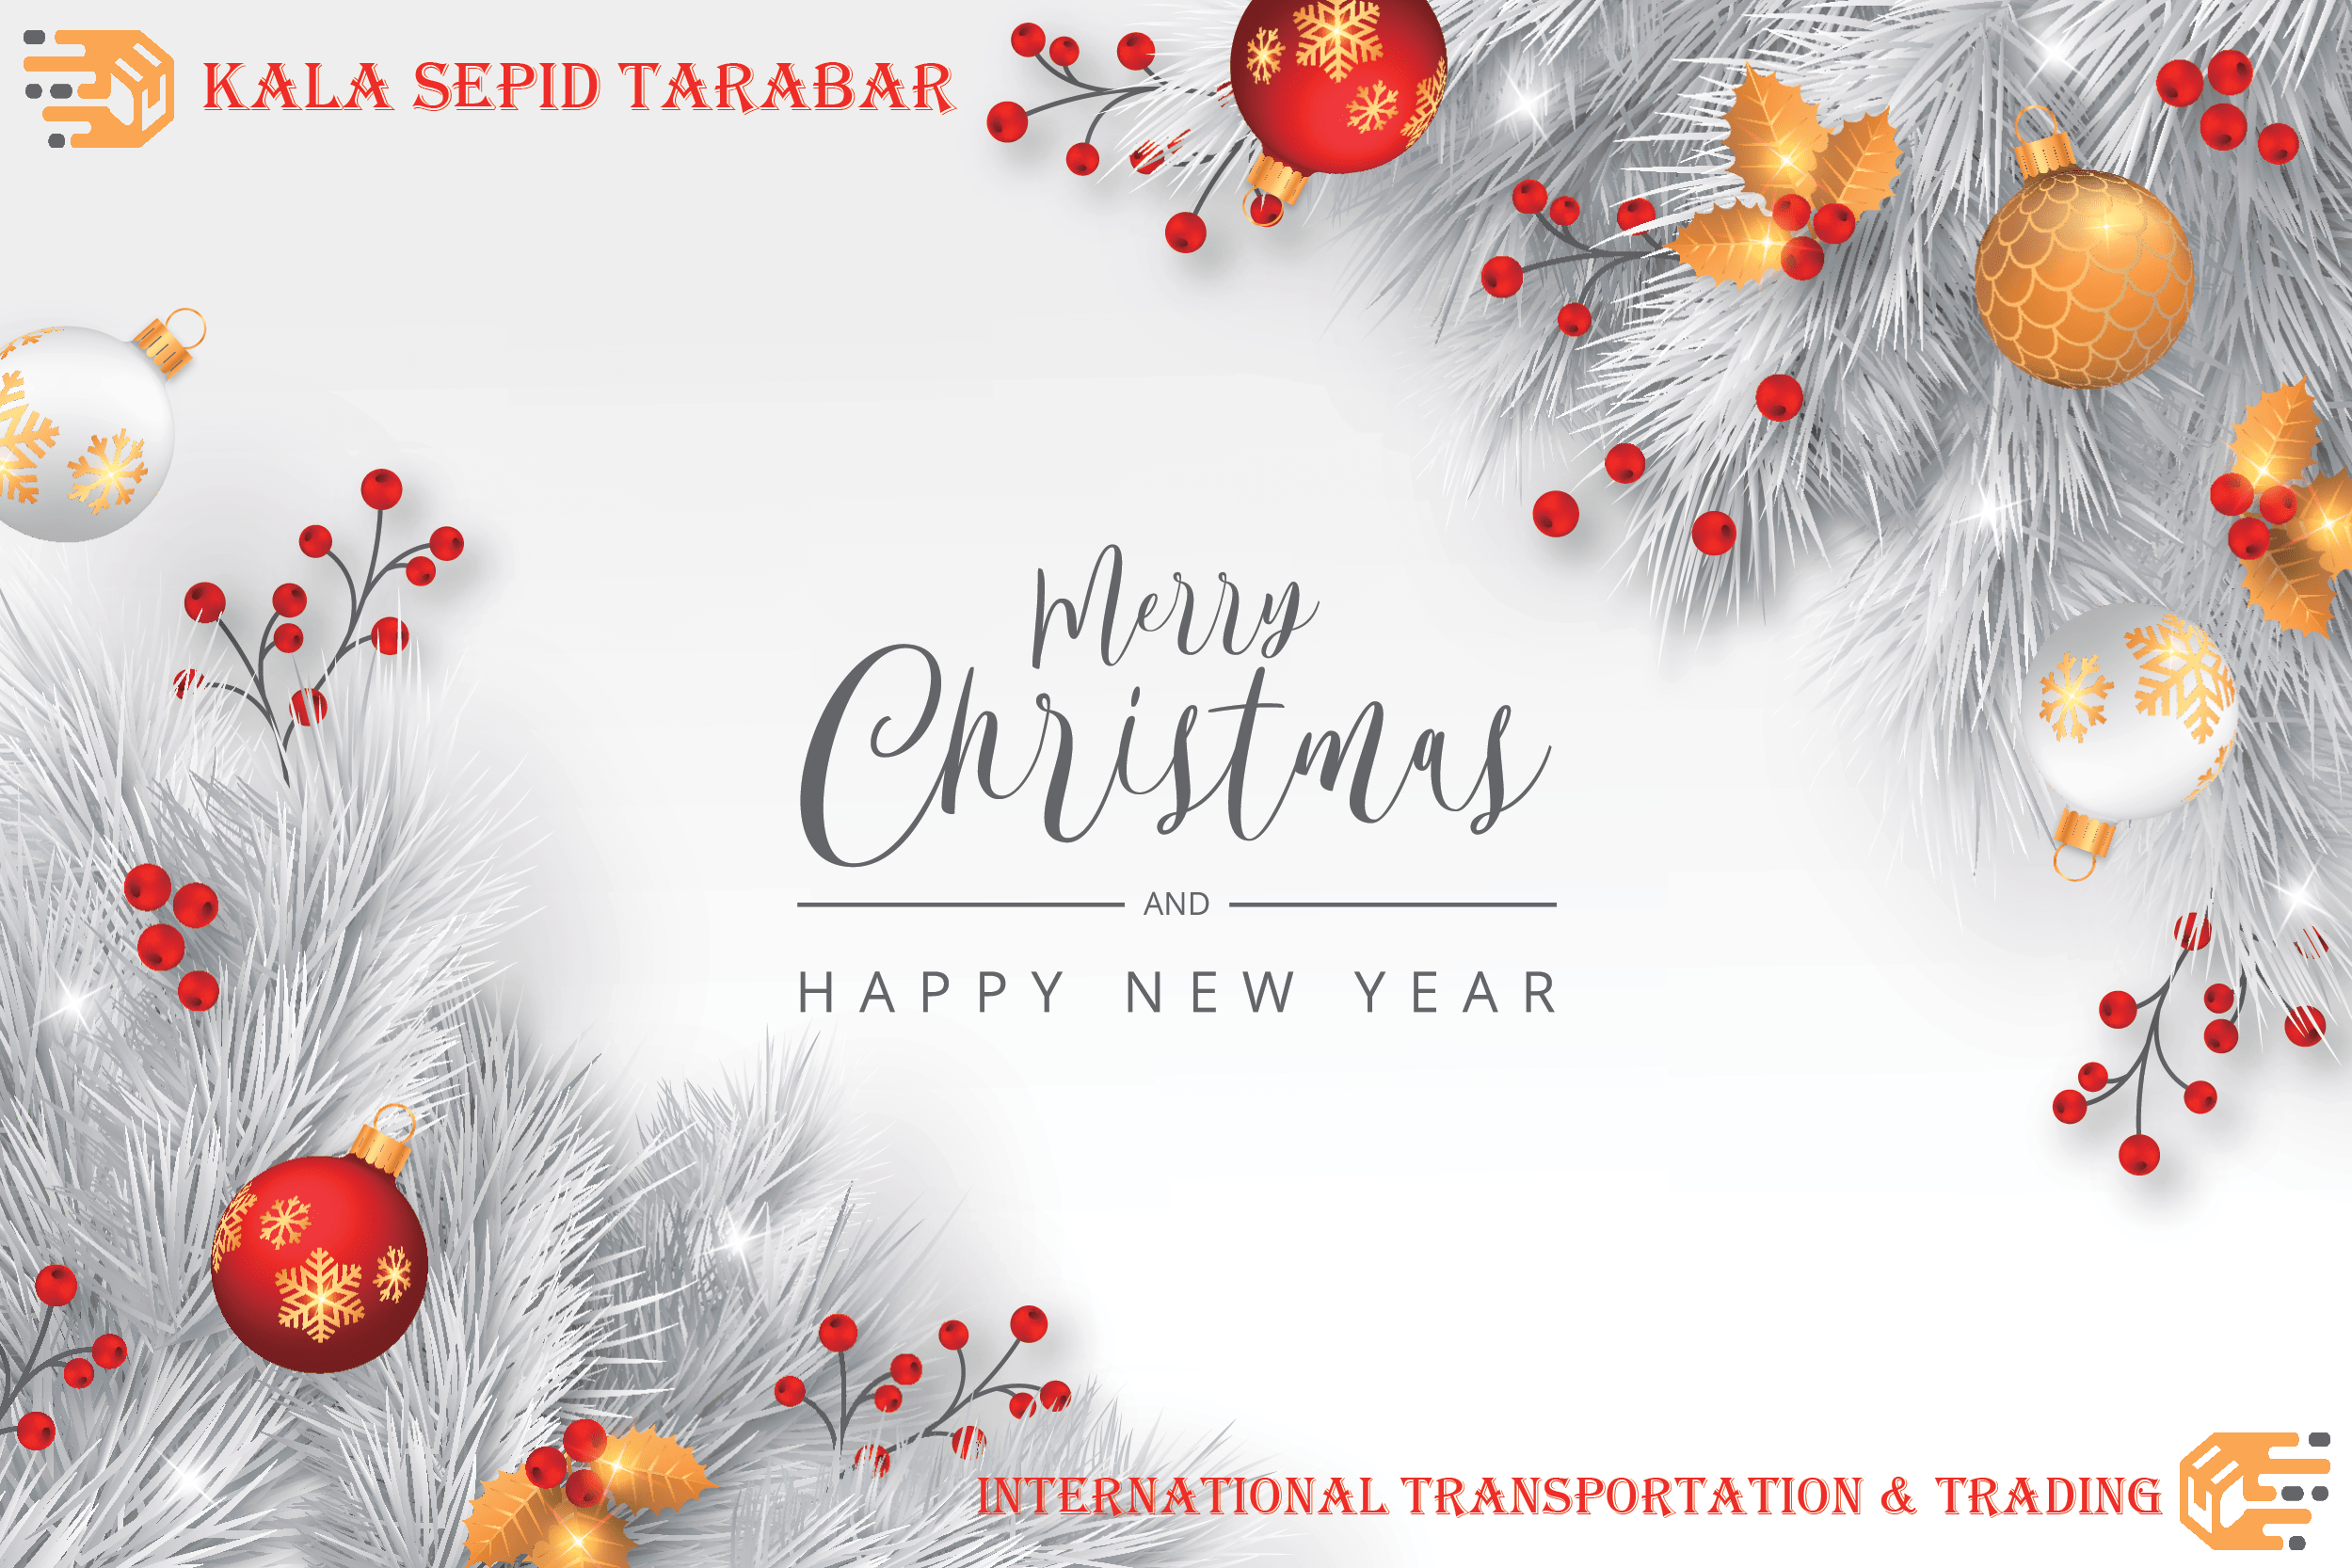 Christmas, Merry Christmas, Happy Christmas, kala sepid tarabar, international transportation and trading company